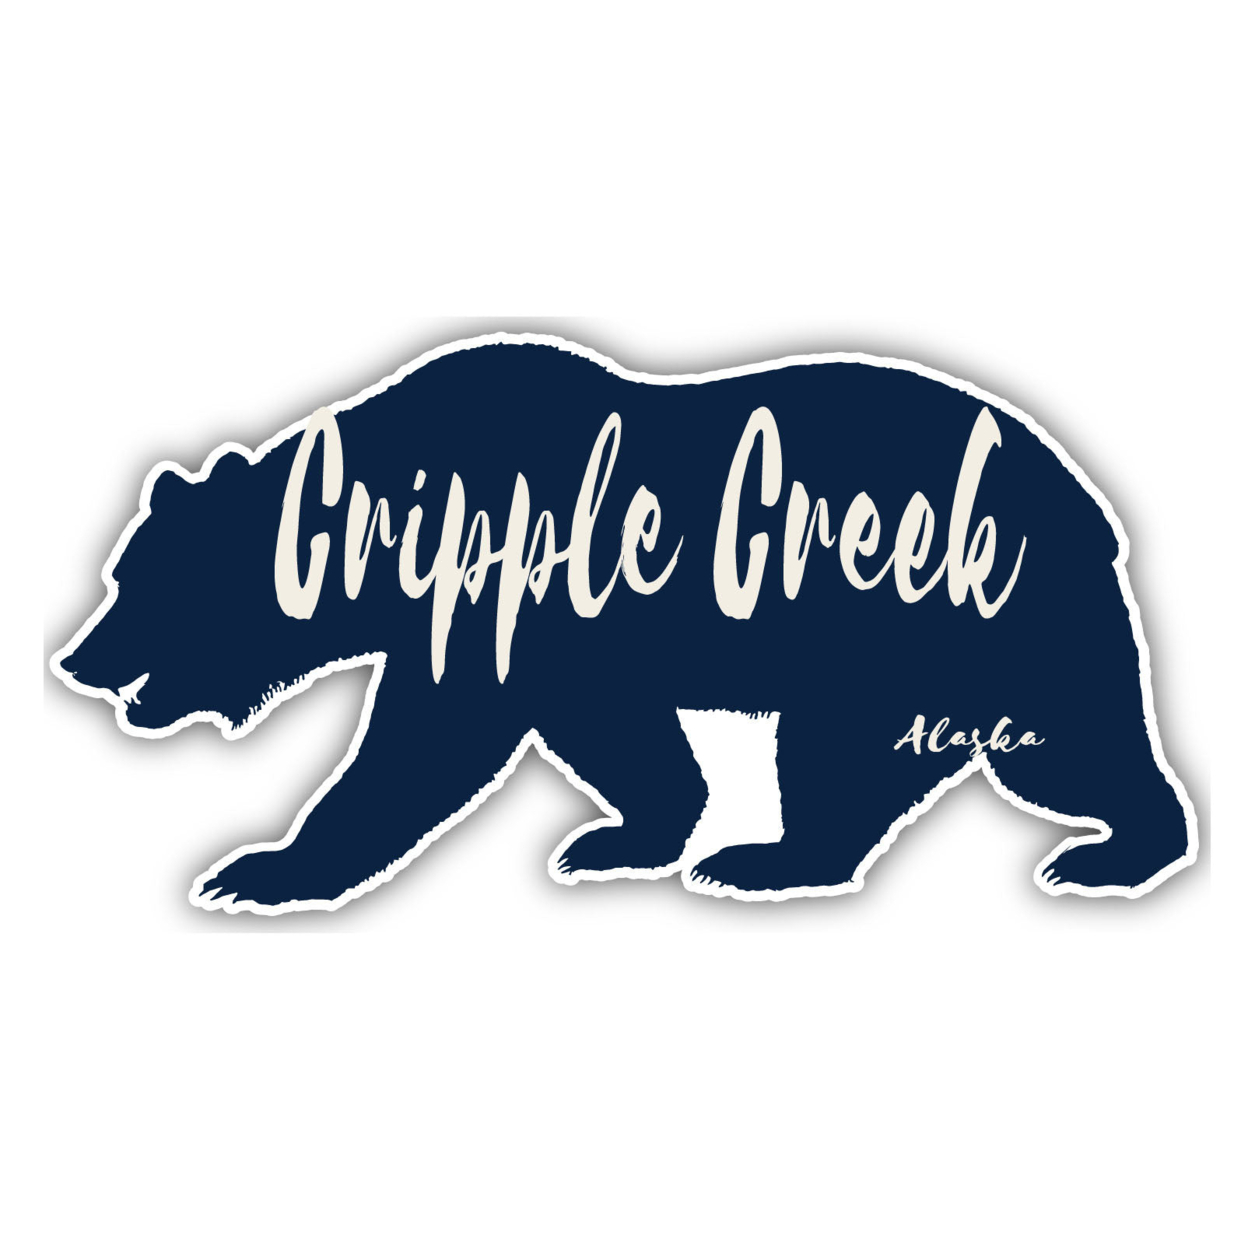 Cripple Creek Alaska Souvenir Decorative Stickers (Choose Theme And Size) - 4-Pack, 10-Inch, Bear